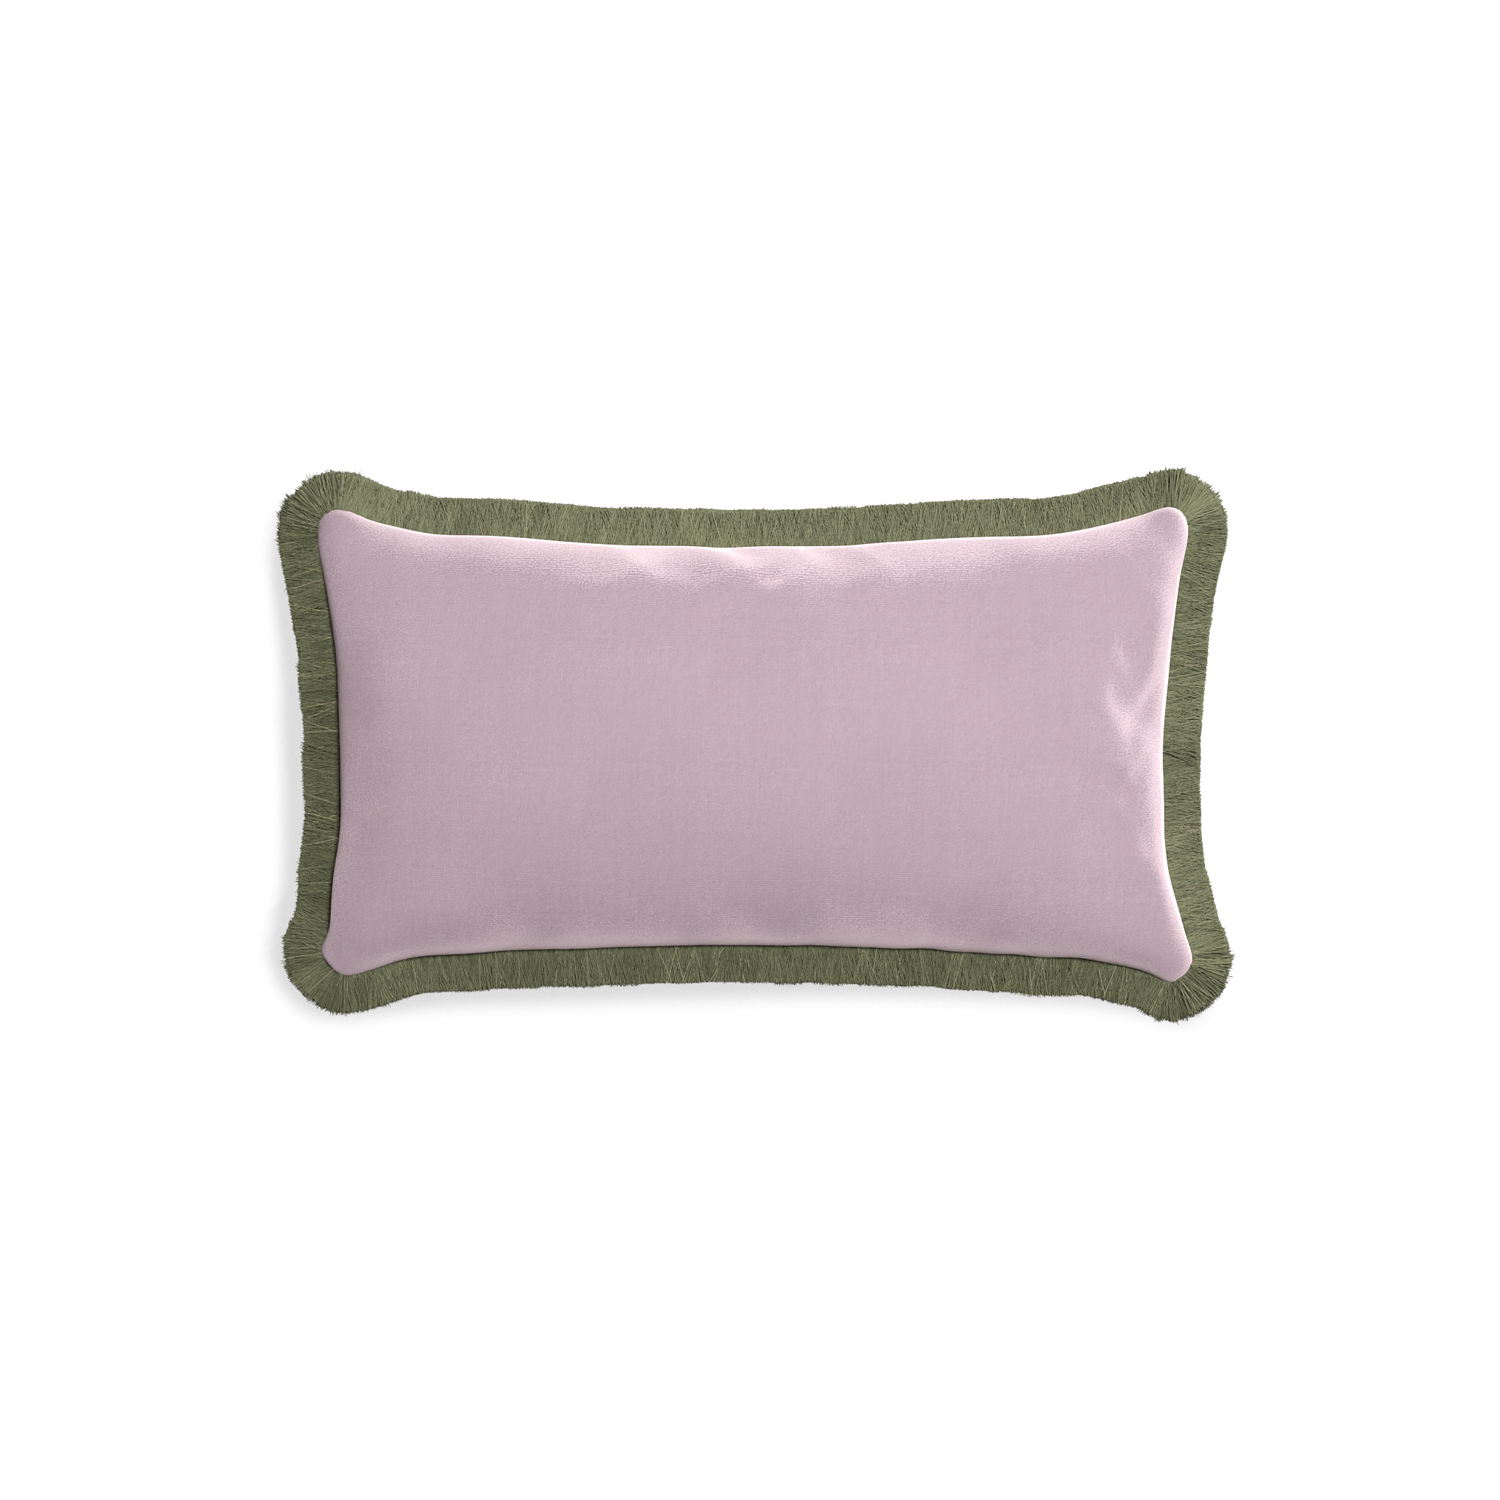 rectangle lilac velvet pillow with sage green fringe